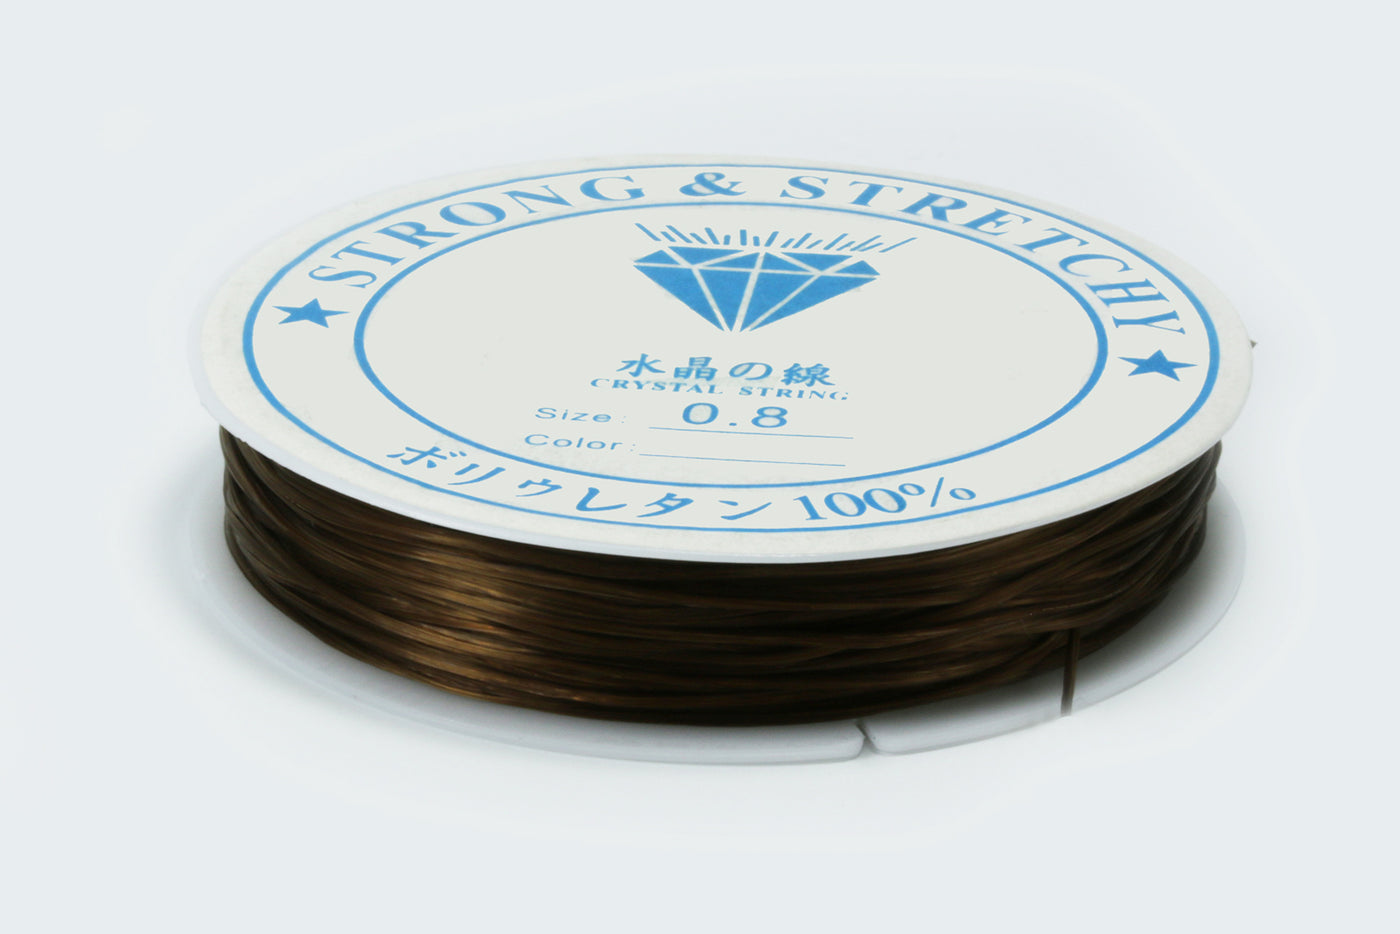 Gummifaden elastisch, 0,8 mm, 10 m, (0,15€/m)